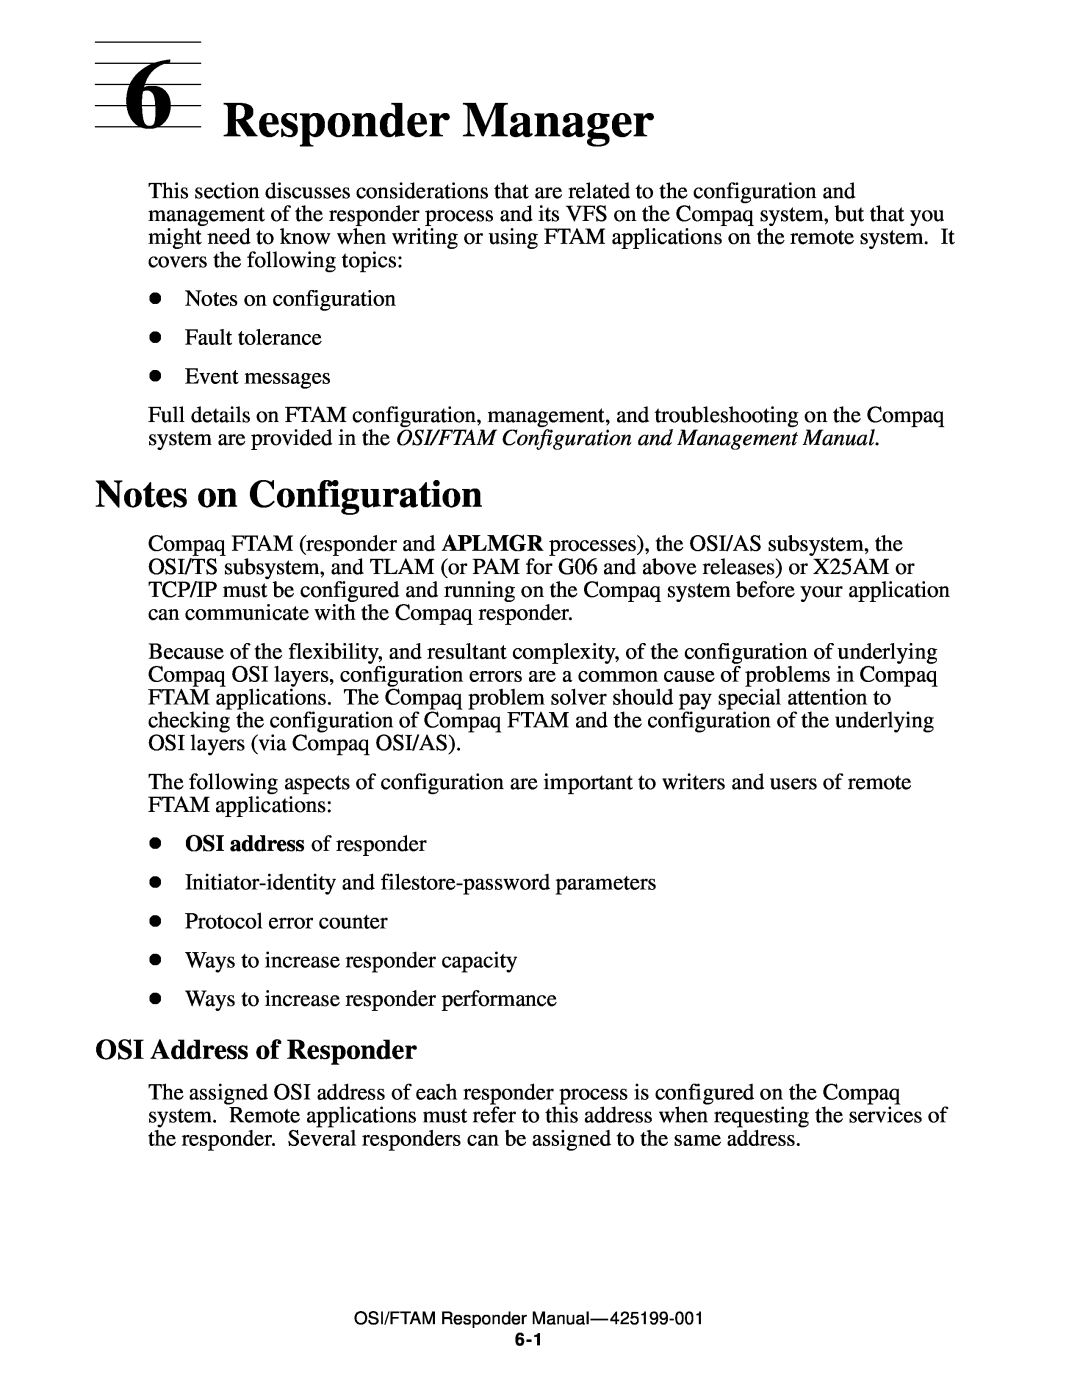 Compaq OSI/FTAM D43 manual Responder Manager, Notes on Configuration, OSI Address of Responder, OSI address of responder 